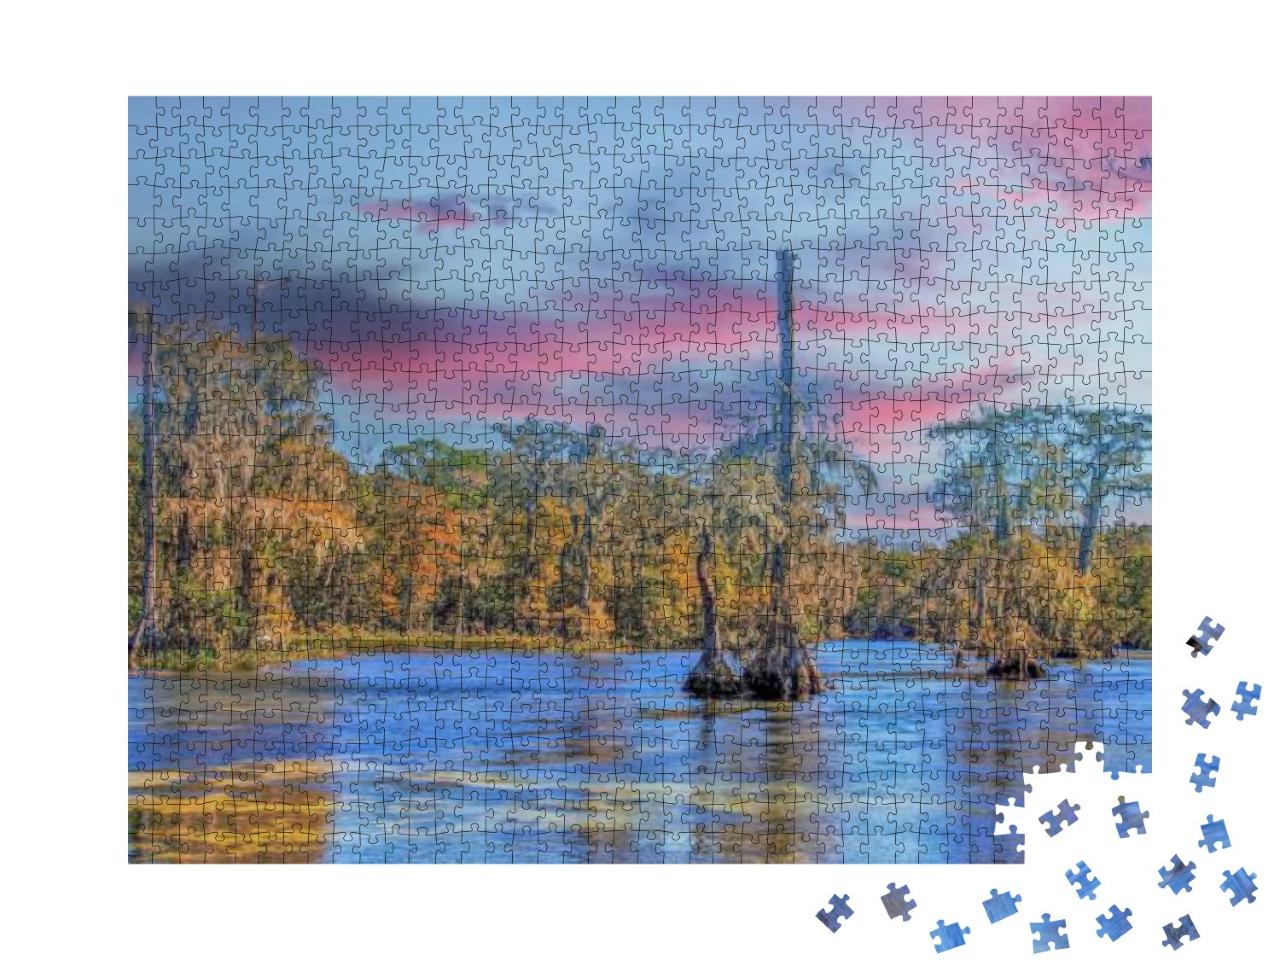 Puzzle 1000 Teile „Wakulla Springs, Everglades, Florida“